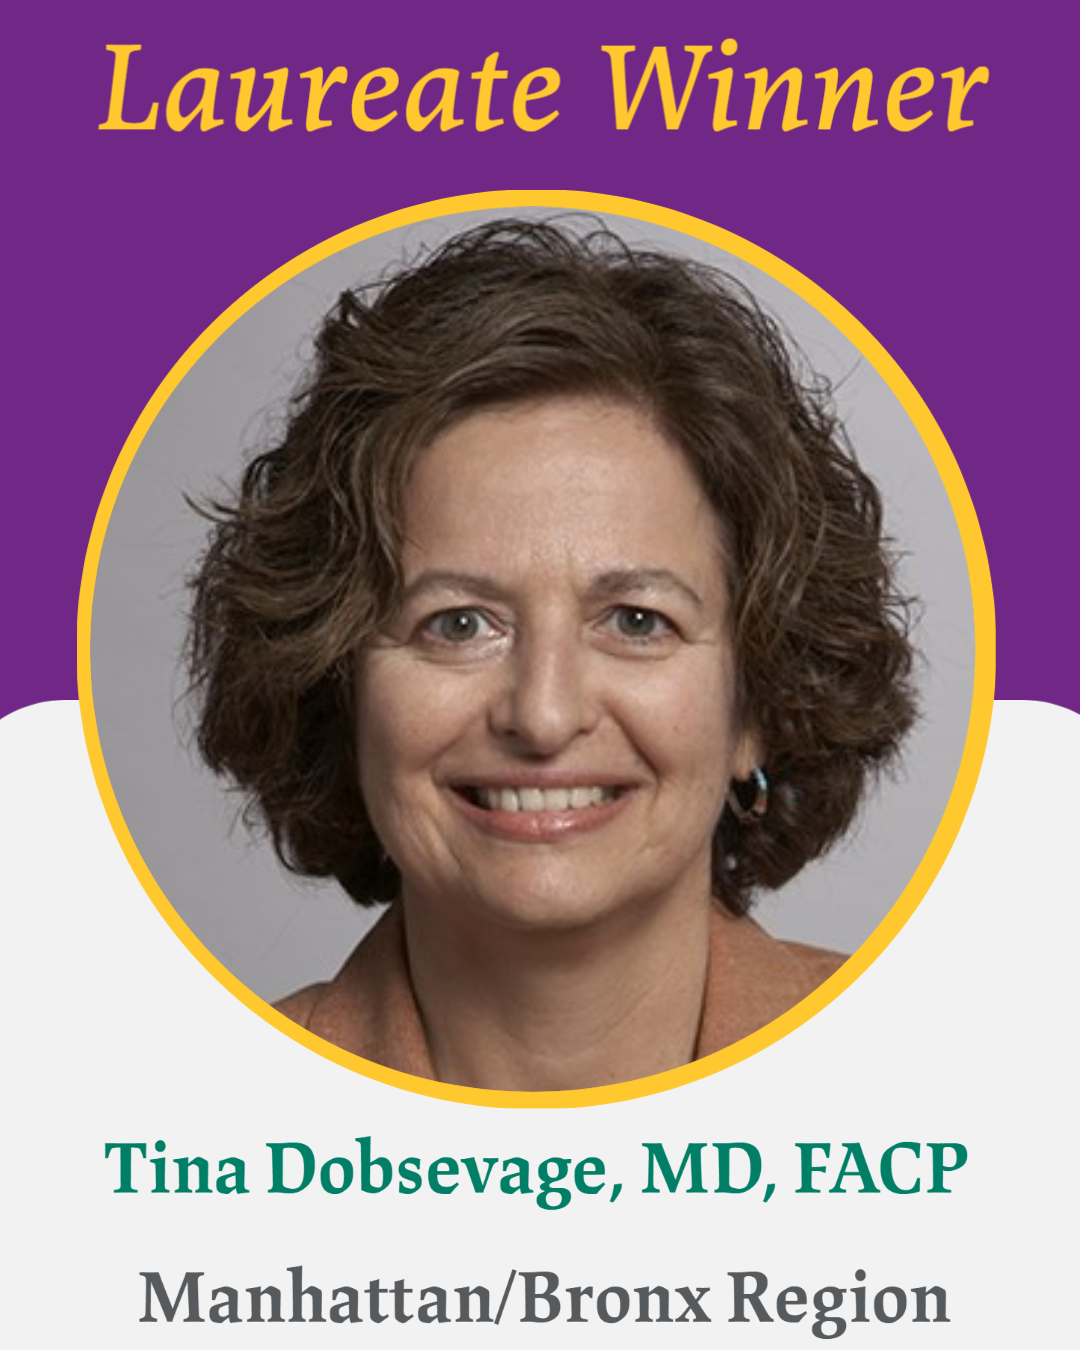 Tina Dobsevage, MD, FACP